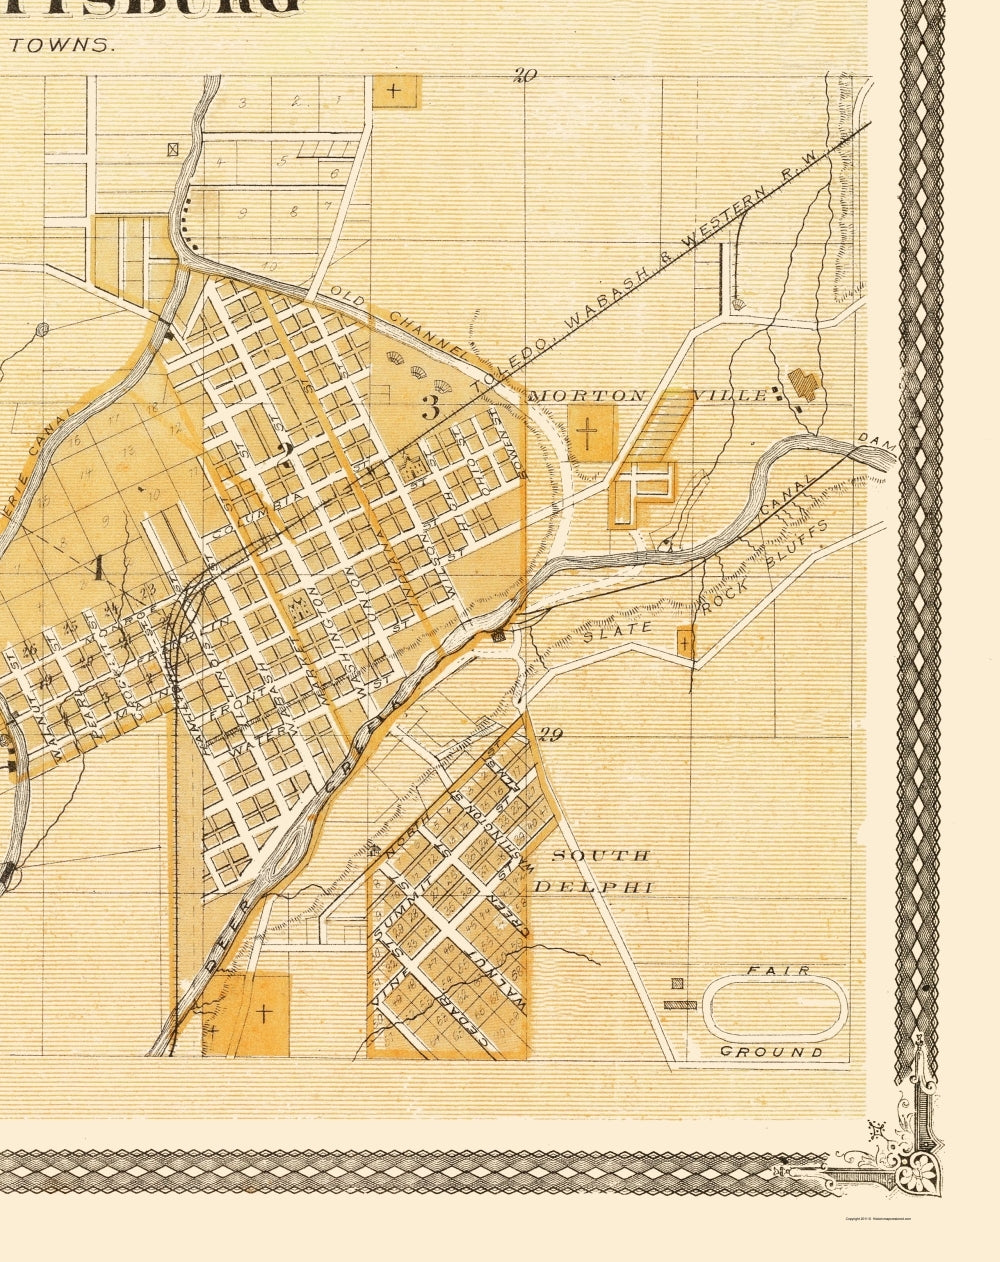 Historic City Map - Delphi Indiana - Baskin 1876 - 23 x 29.03 - Vintage Wall Art